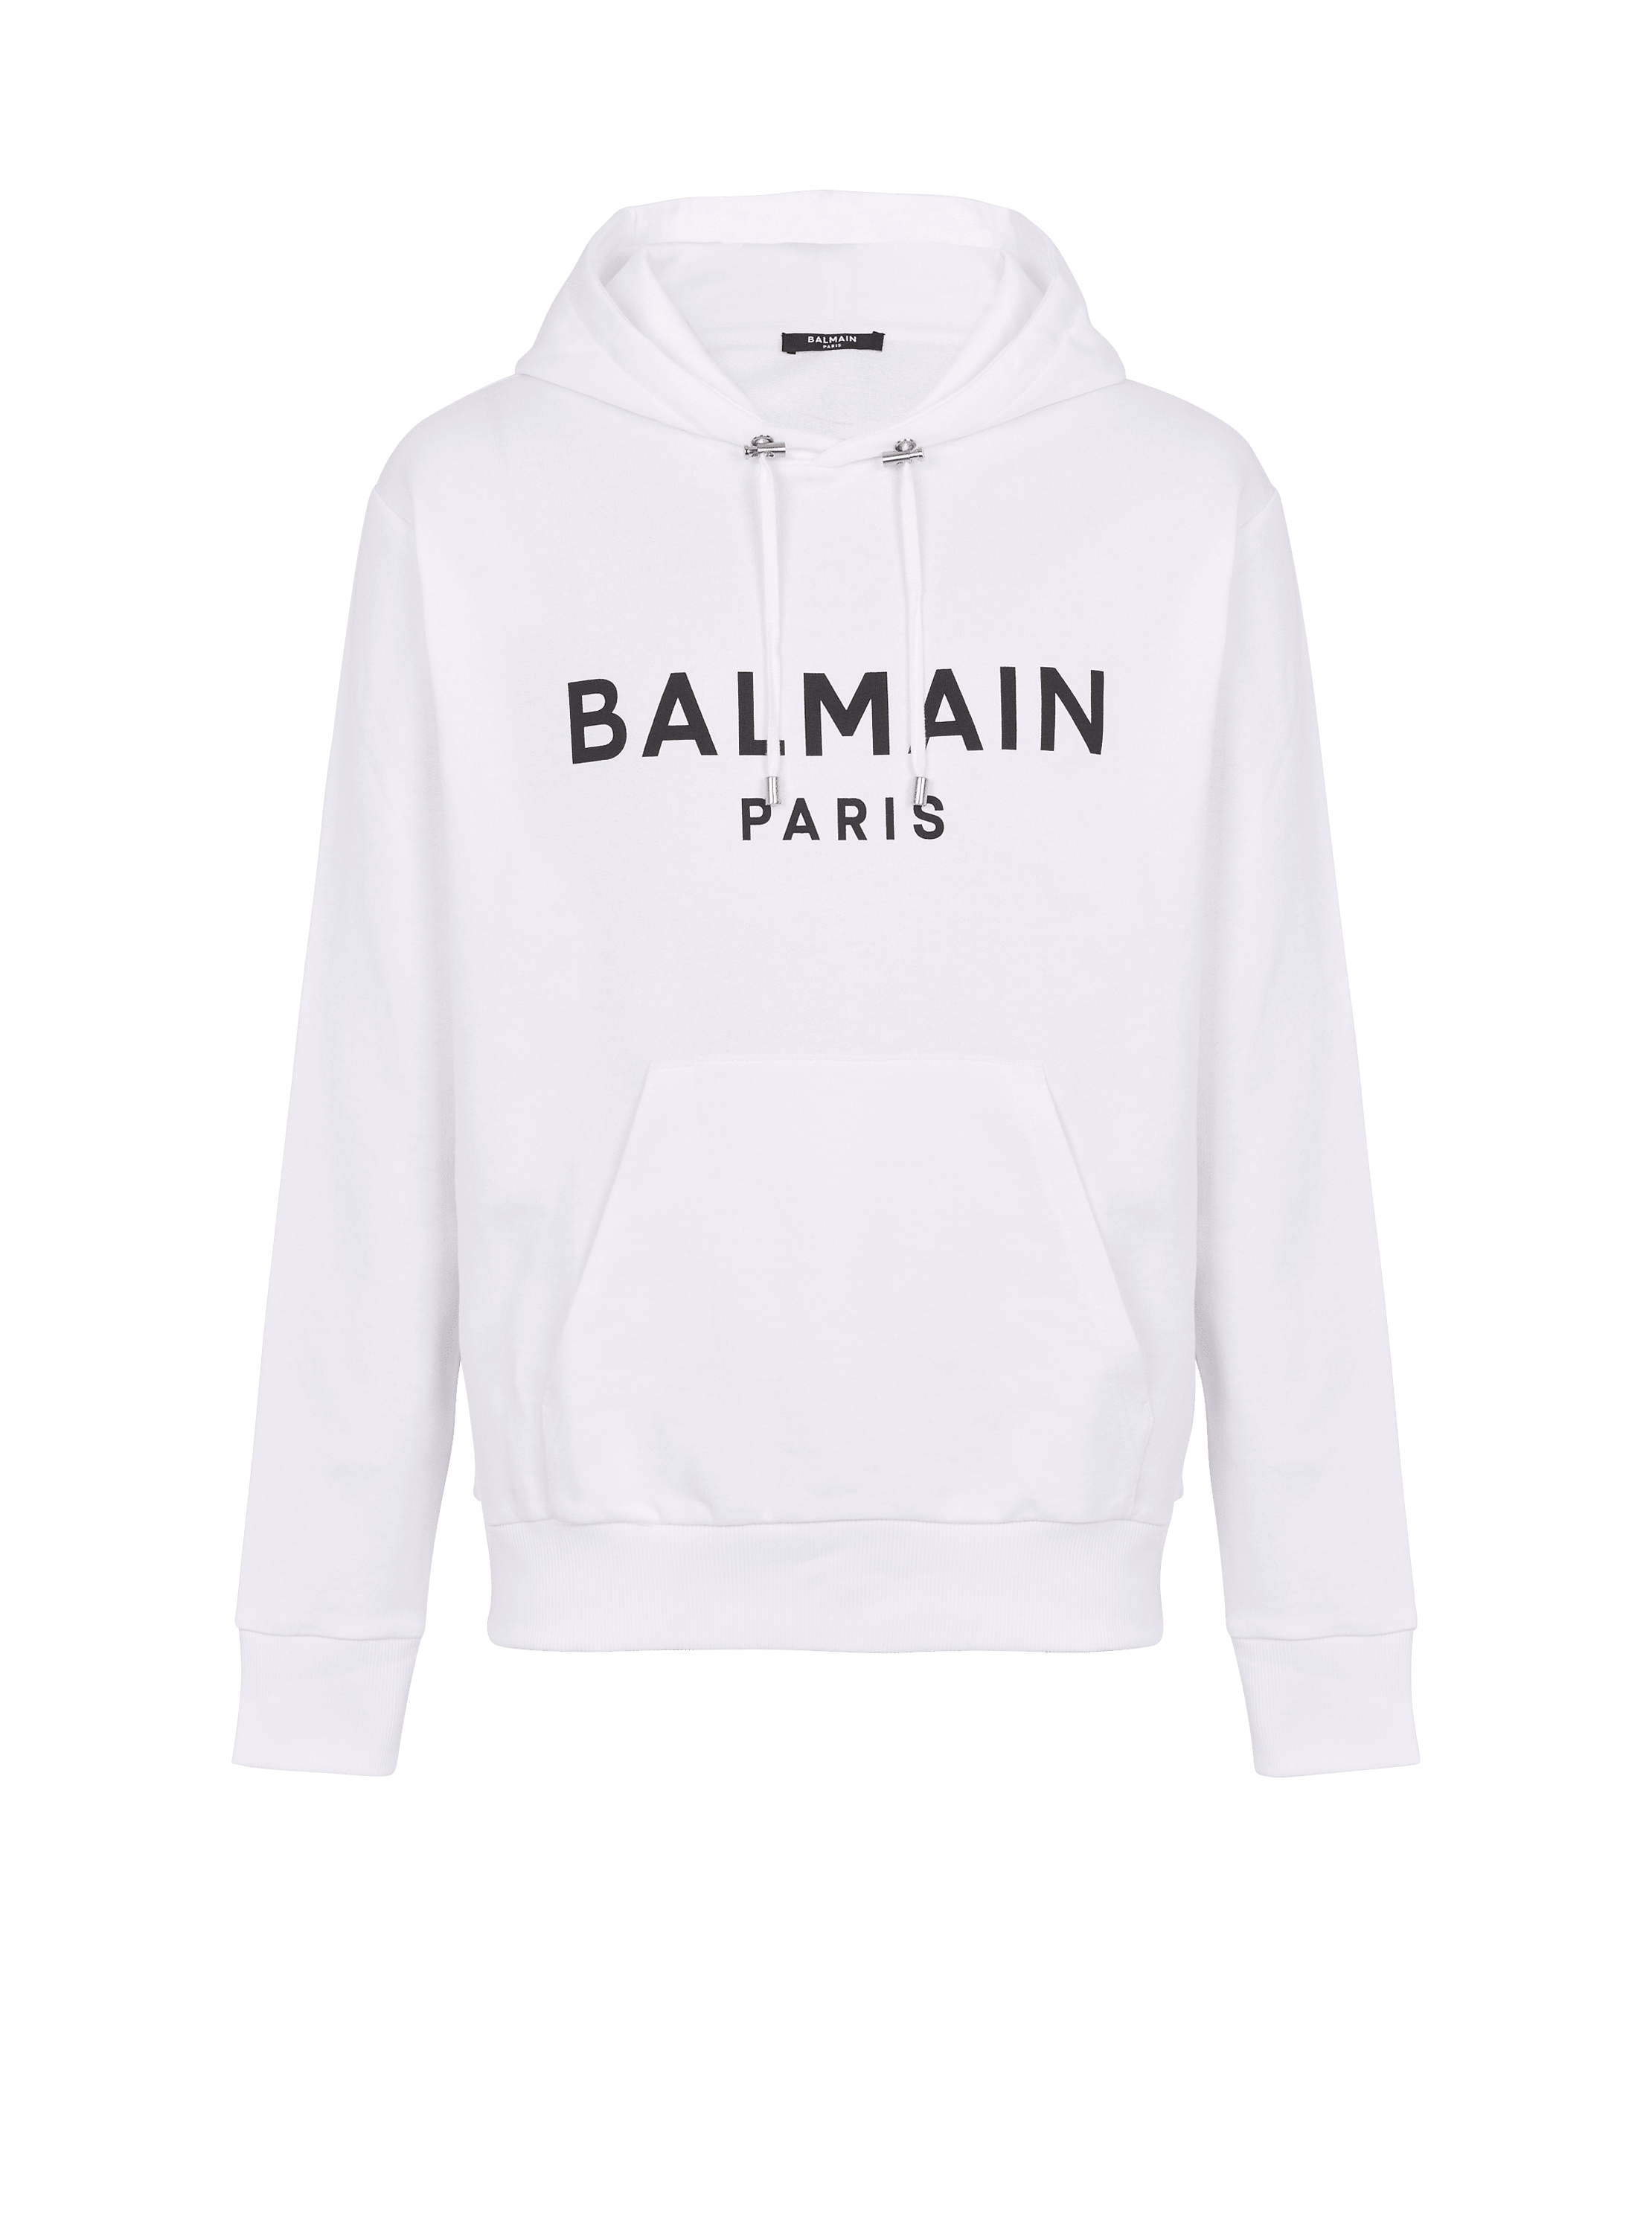 Balmain Paris hooded sweatshirt, white, hi-res